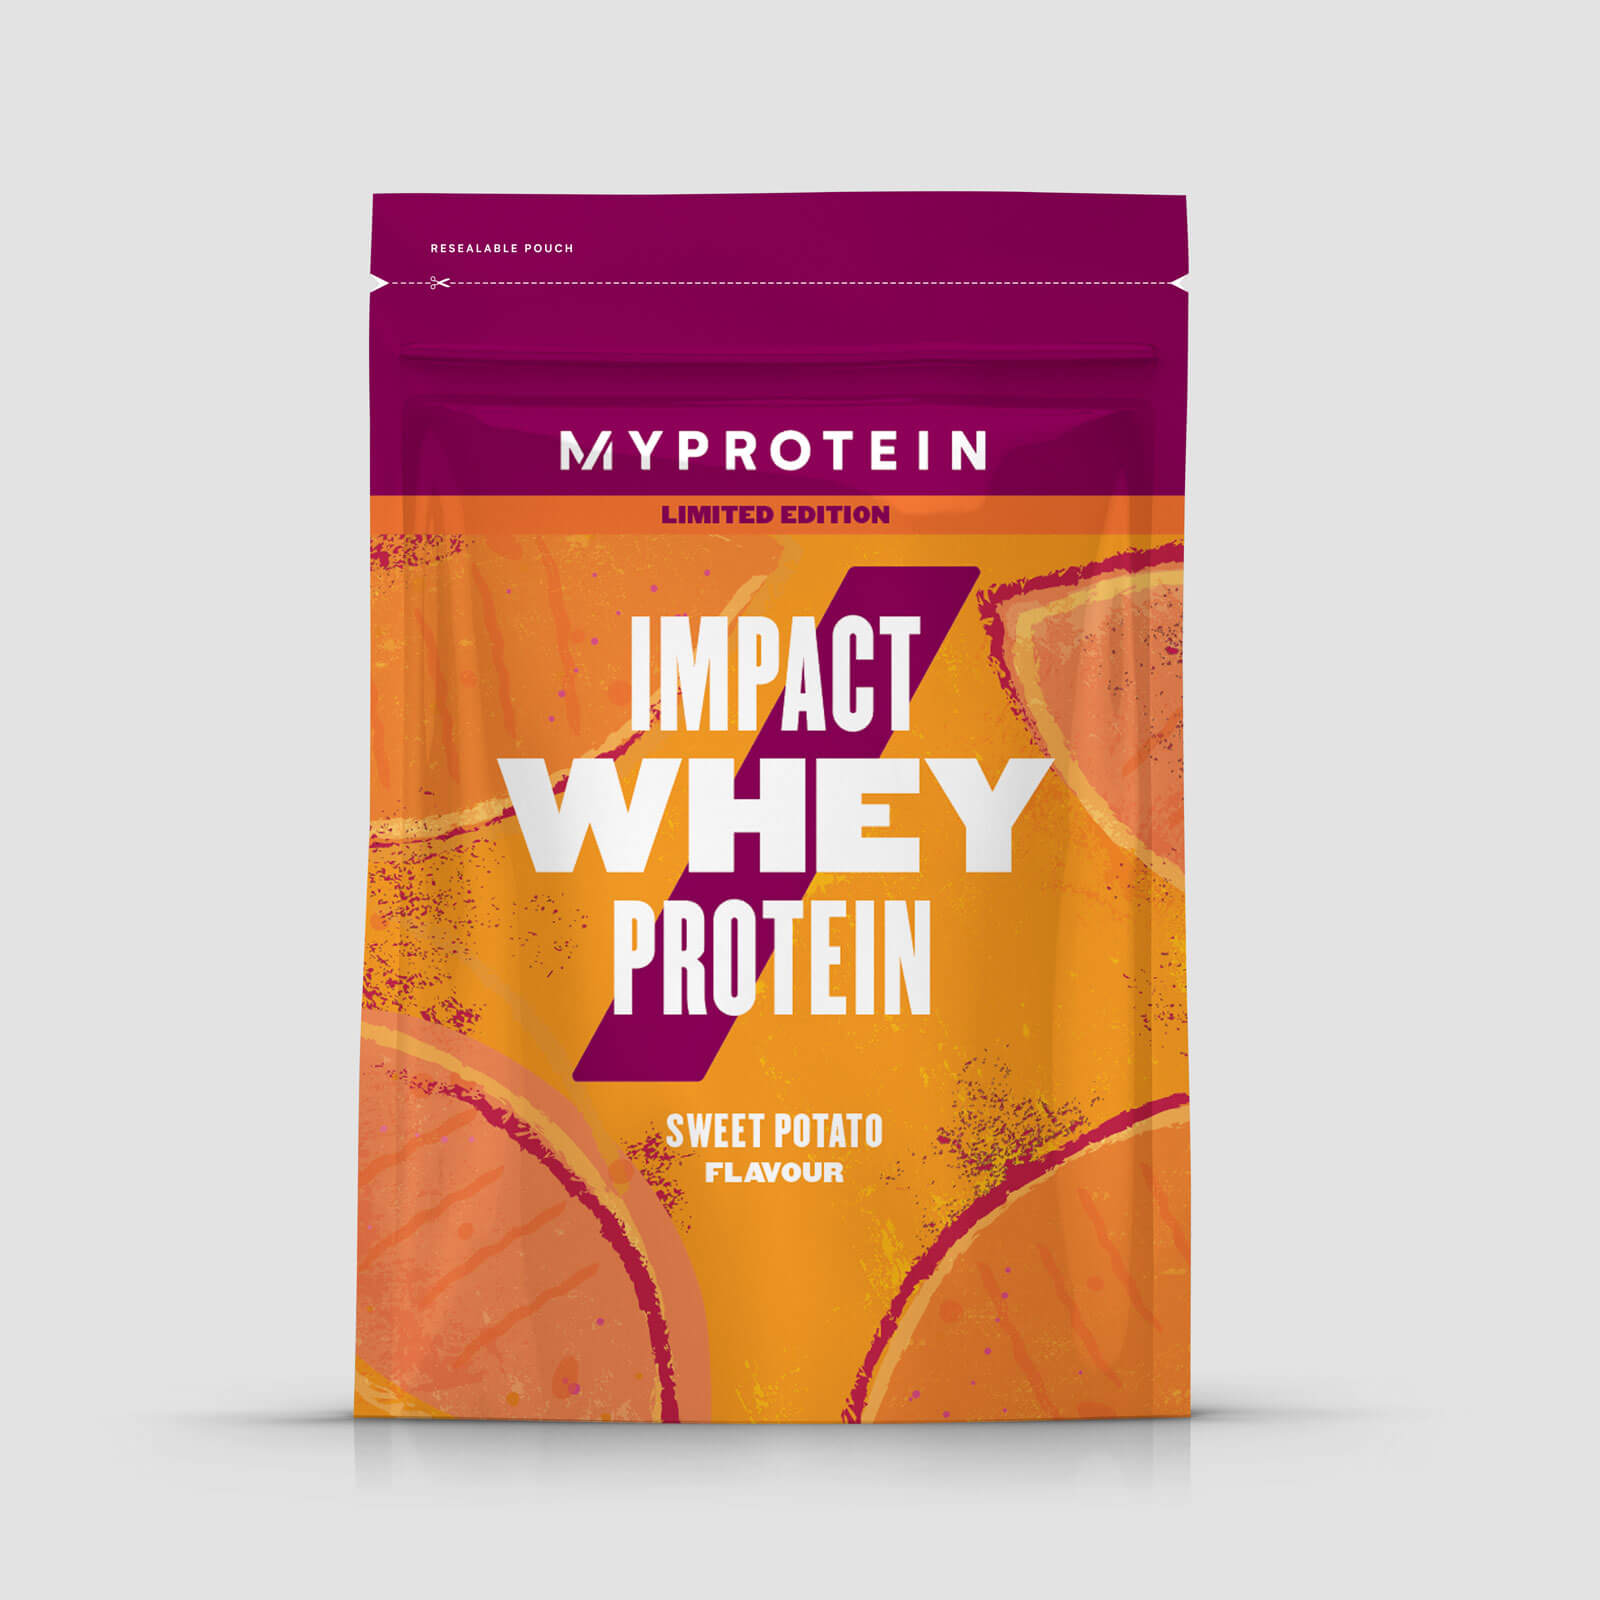 Buy Myprotein Impact Whey Protein, Sweet Potato, 1kg in Sweden